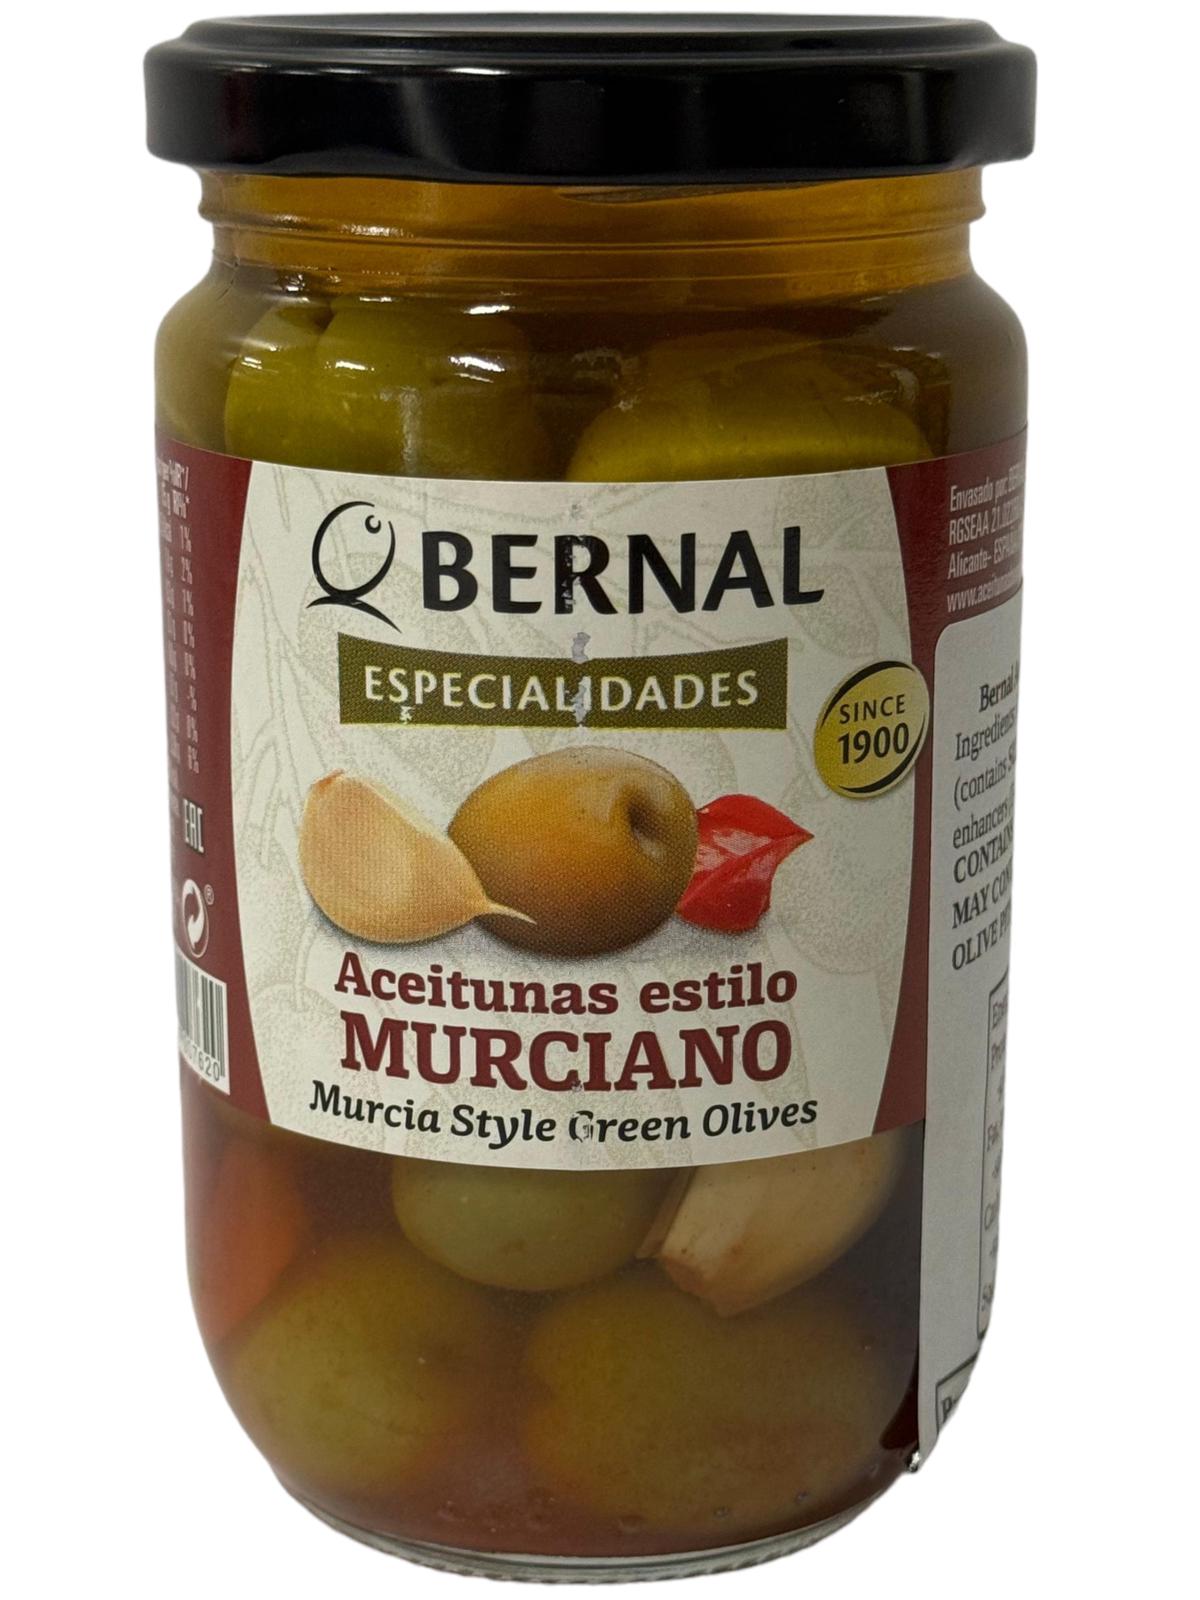 Bernal Especialidades Aceitunas Estilo Murciano Murcia Style Green Olives 300g Best Before End of Jan 2026